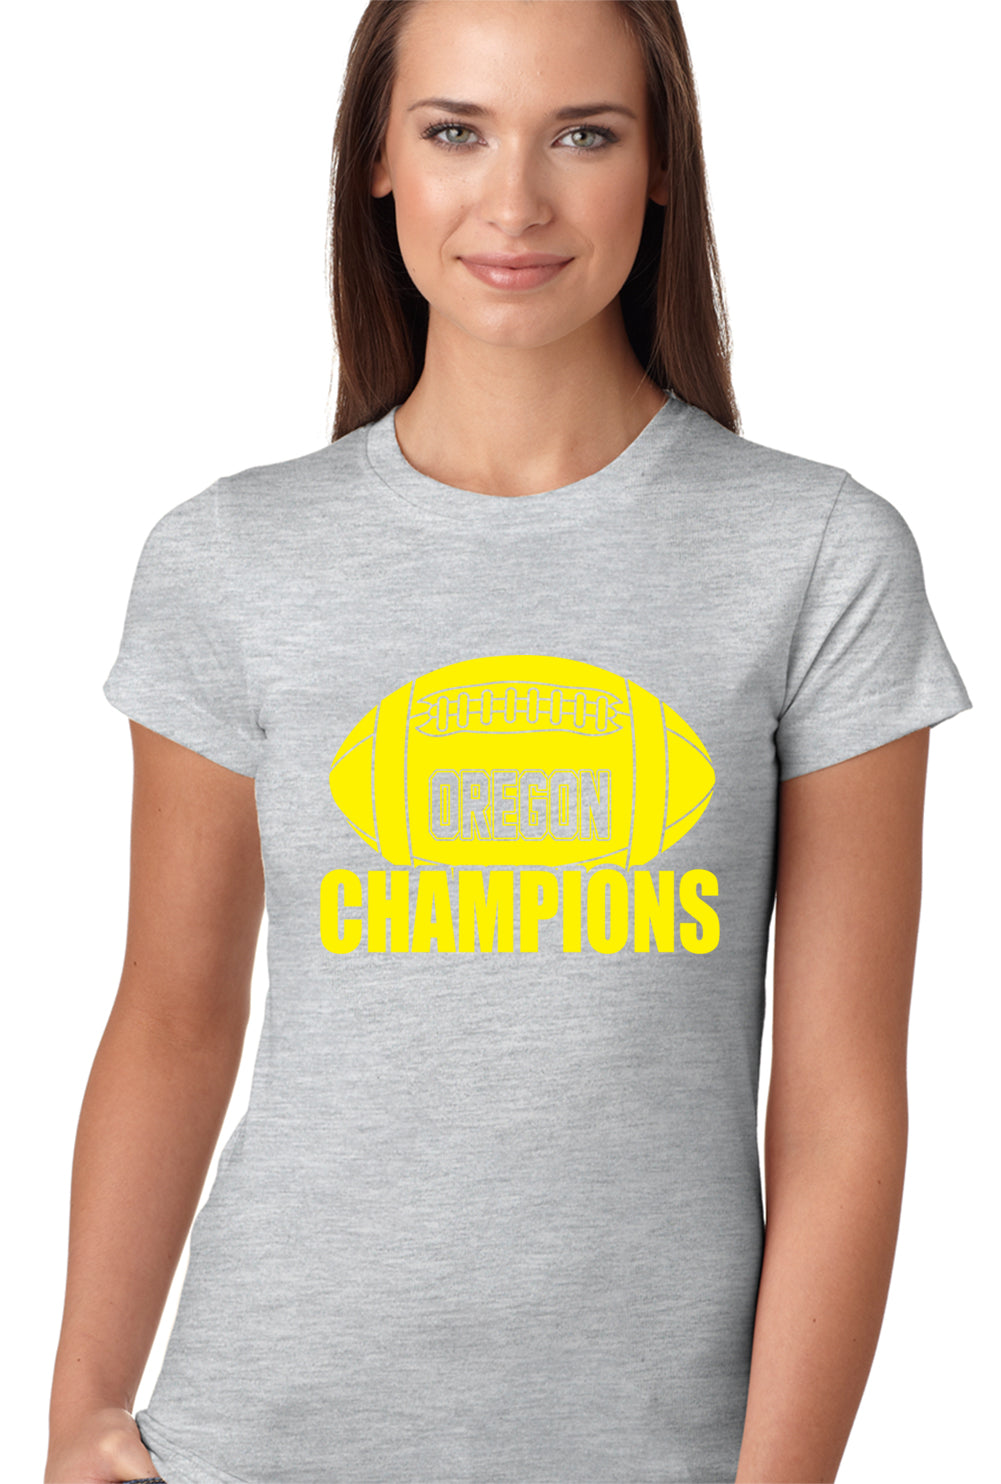 Oregon Football Champions Girls T-shirt